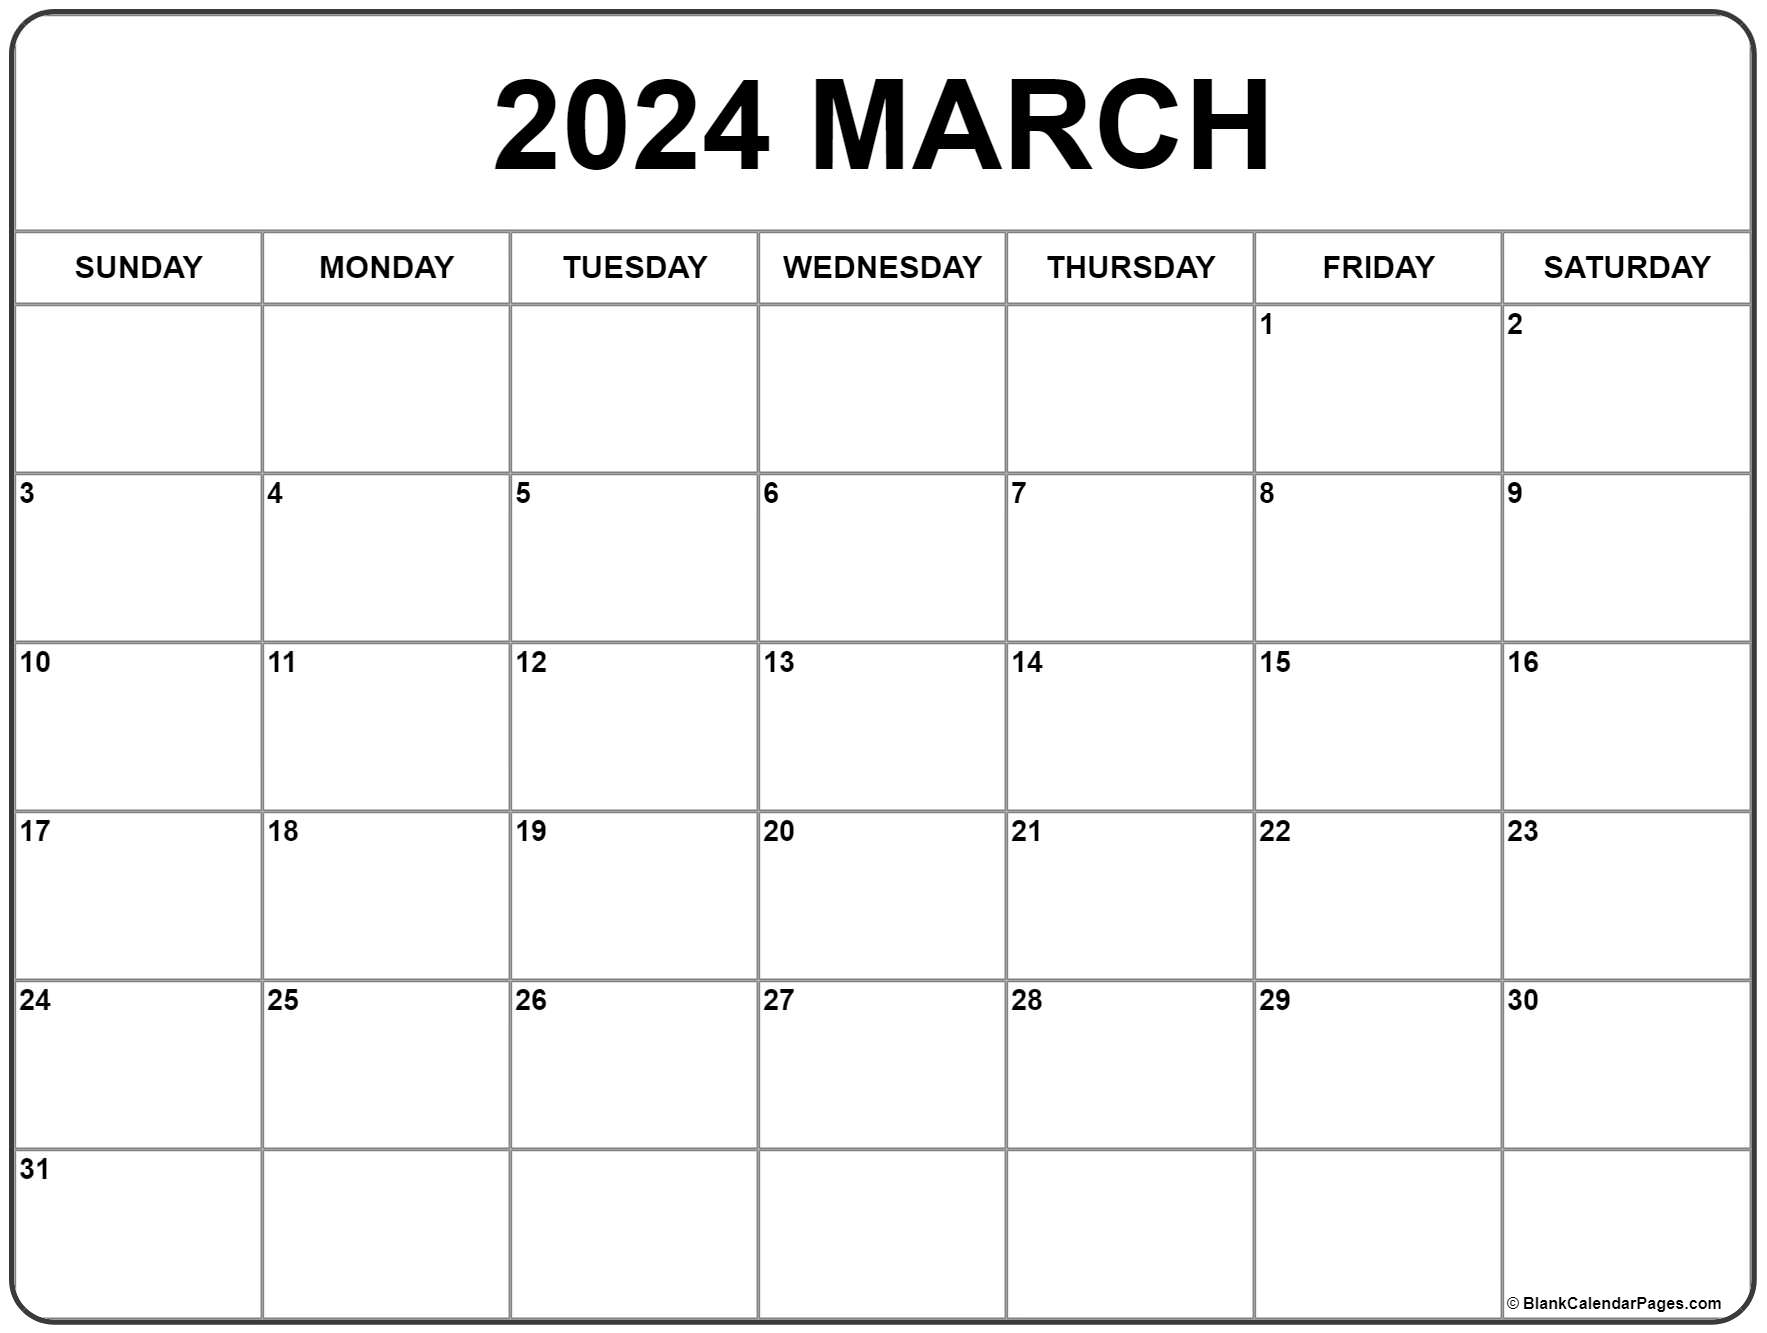 Monthly Calendar 2022 March March 2022 Calendar | Free Printable Calendar Templates